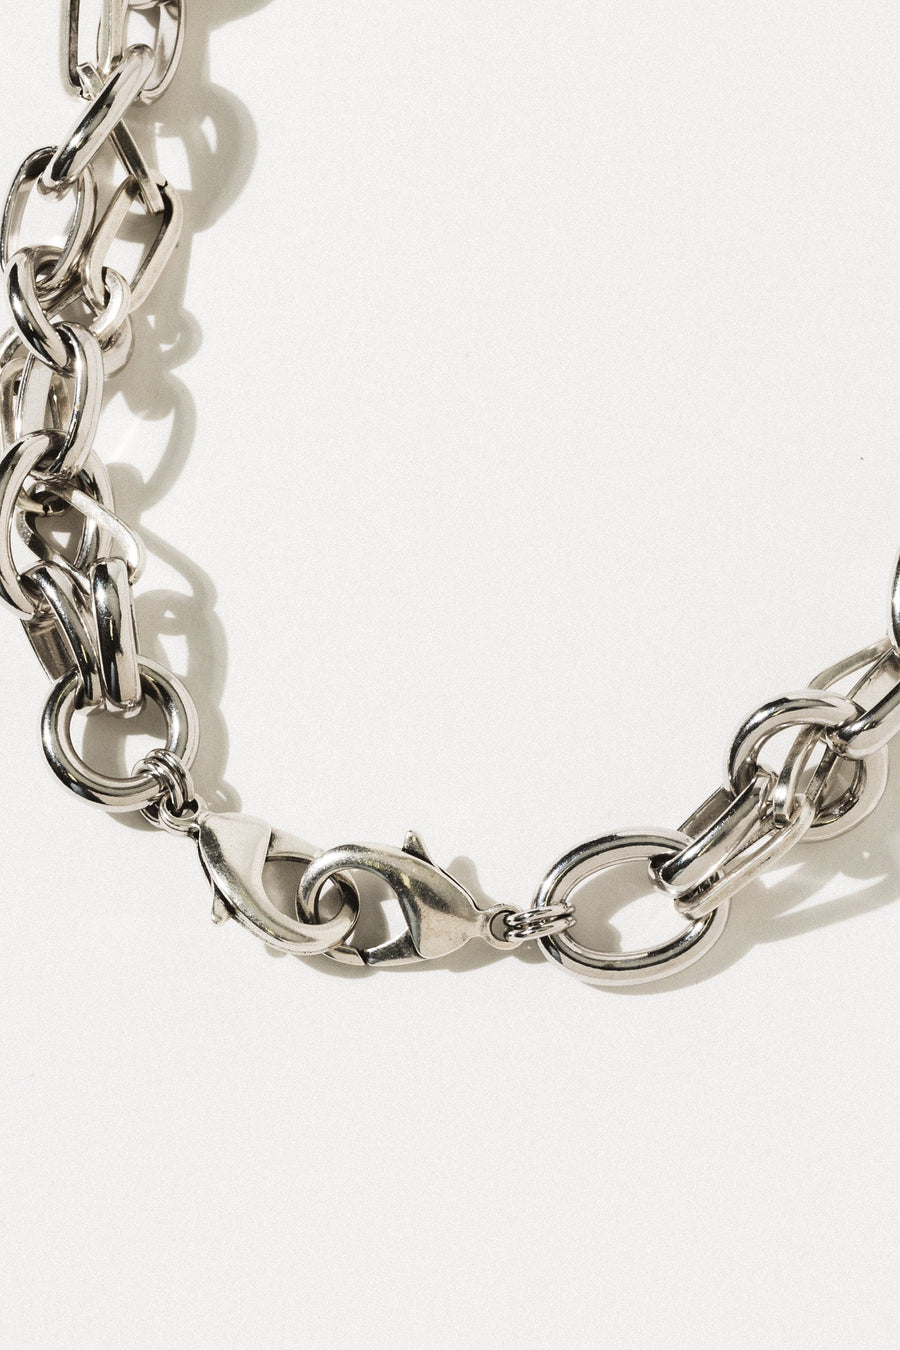 Goddess Jewelry Silver / 22 Inches Ex Machina Dual Chain